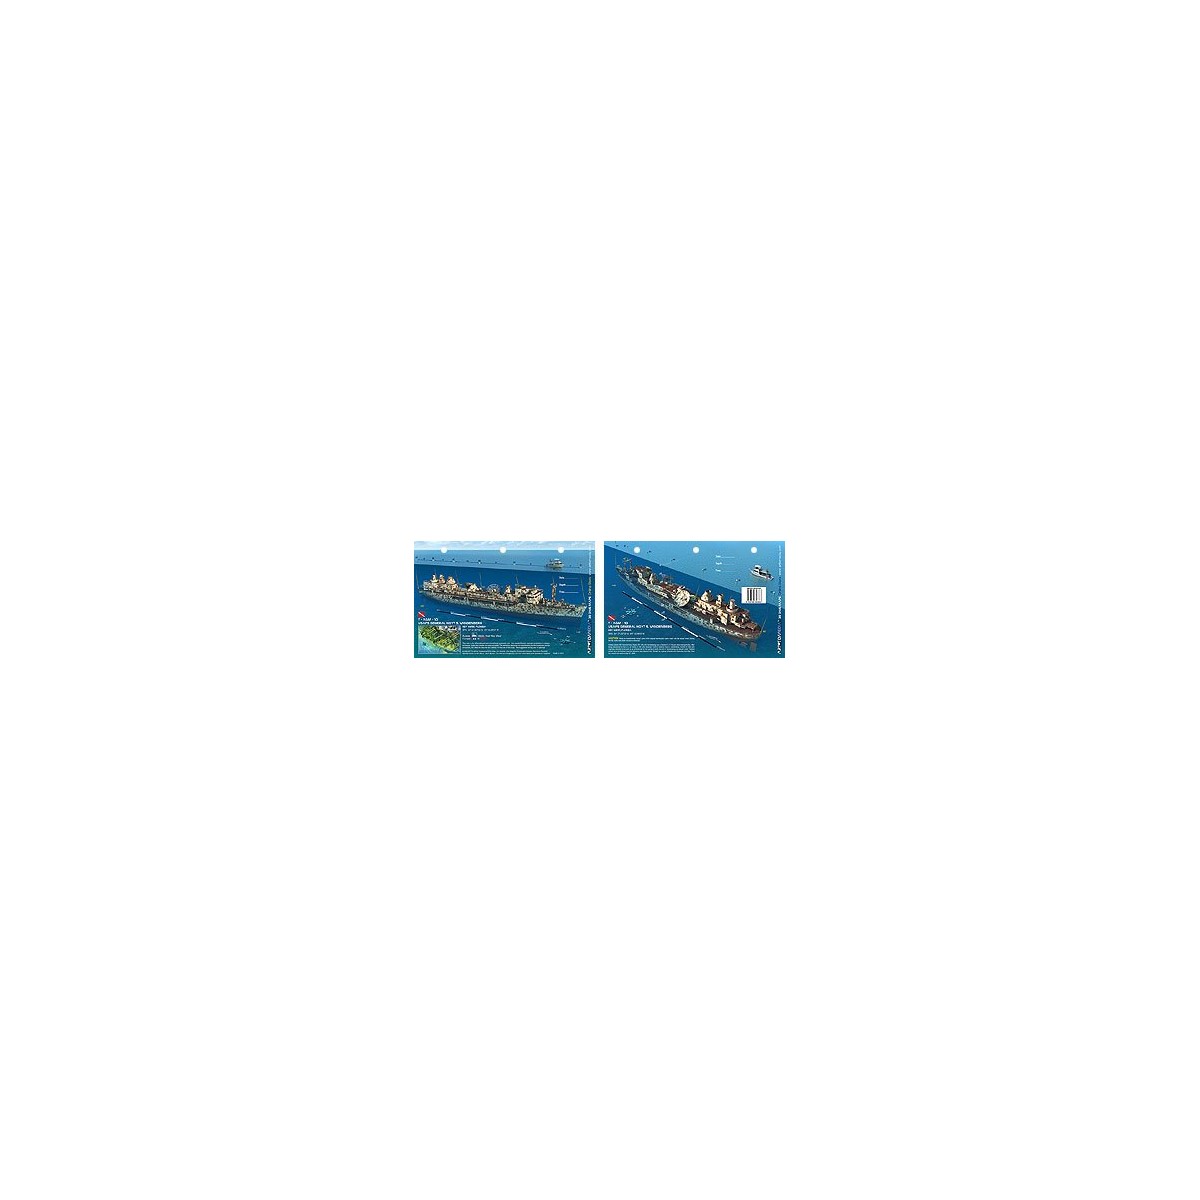 Vandenberg in Key West, Florida (8.5 x 5.5 Inches) (21.6 x 15cm) - New Art to Media Underwater Waterproof 3D Dive Site Map